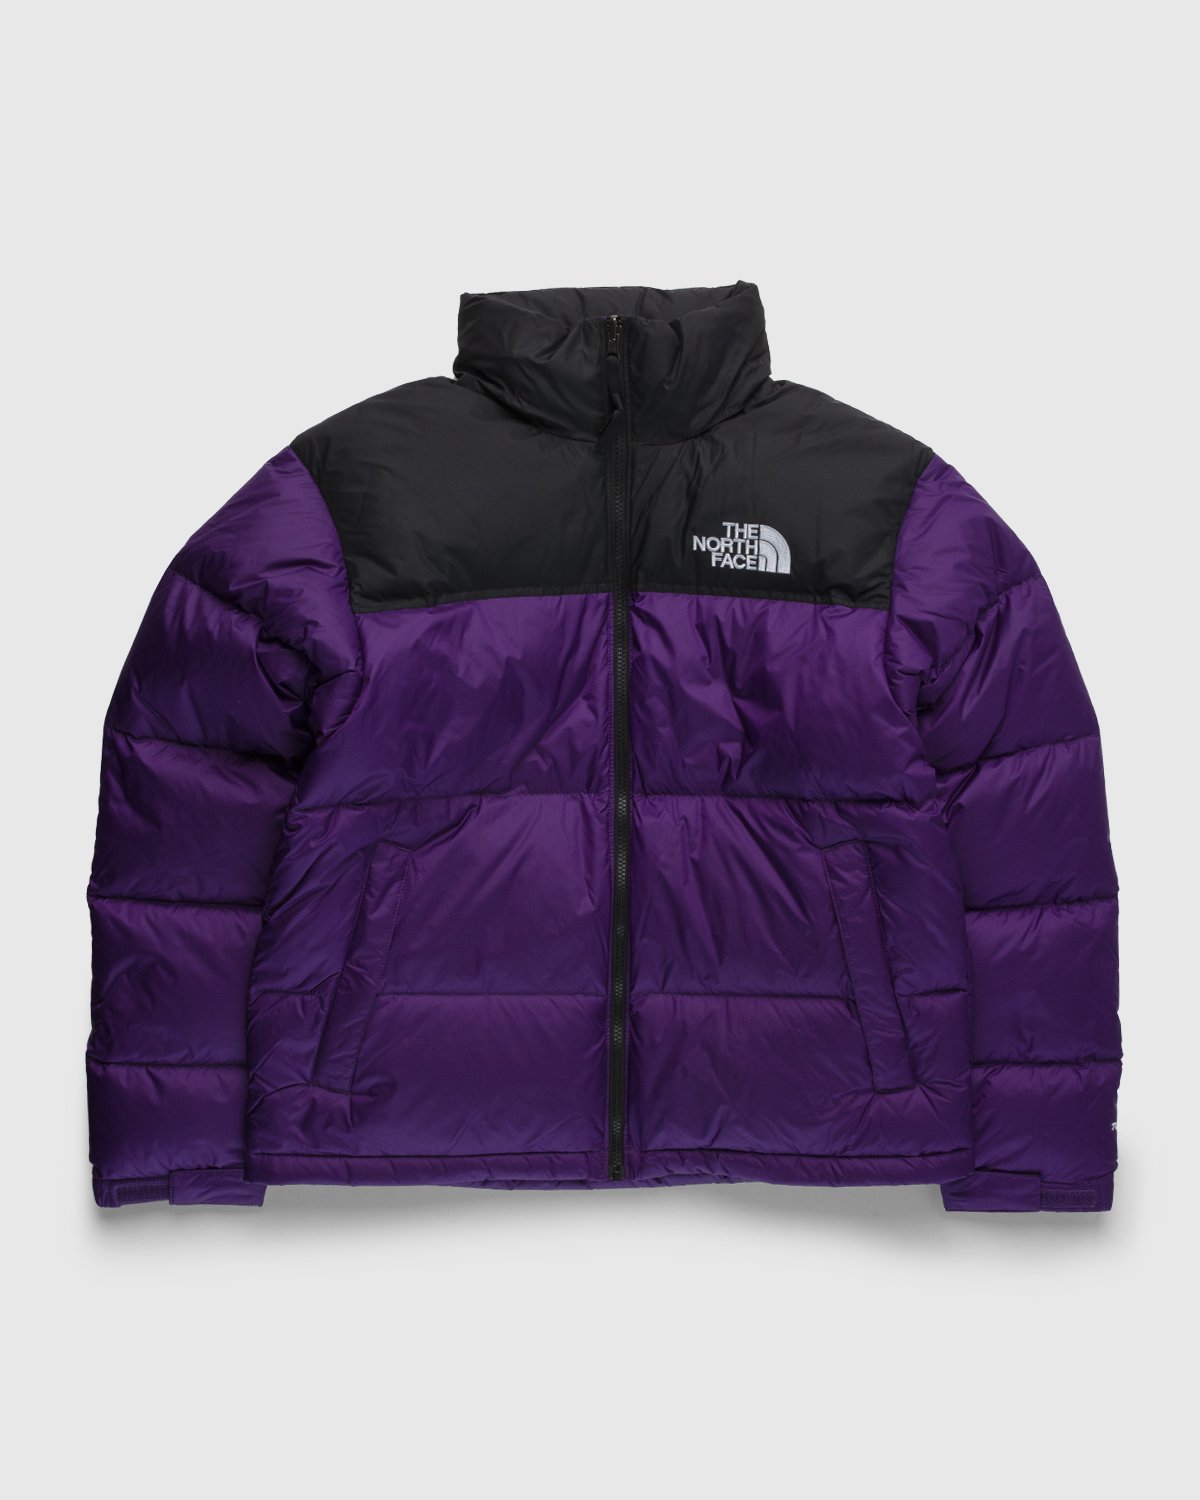 The North Face – 1996 Retro Nuptse Jacket Gravity Purple